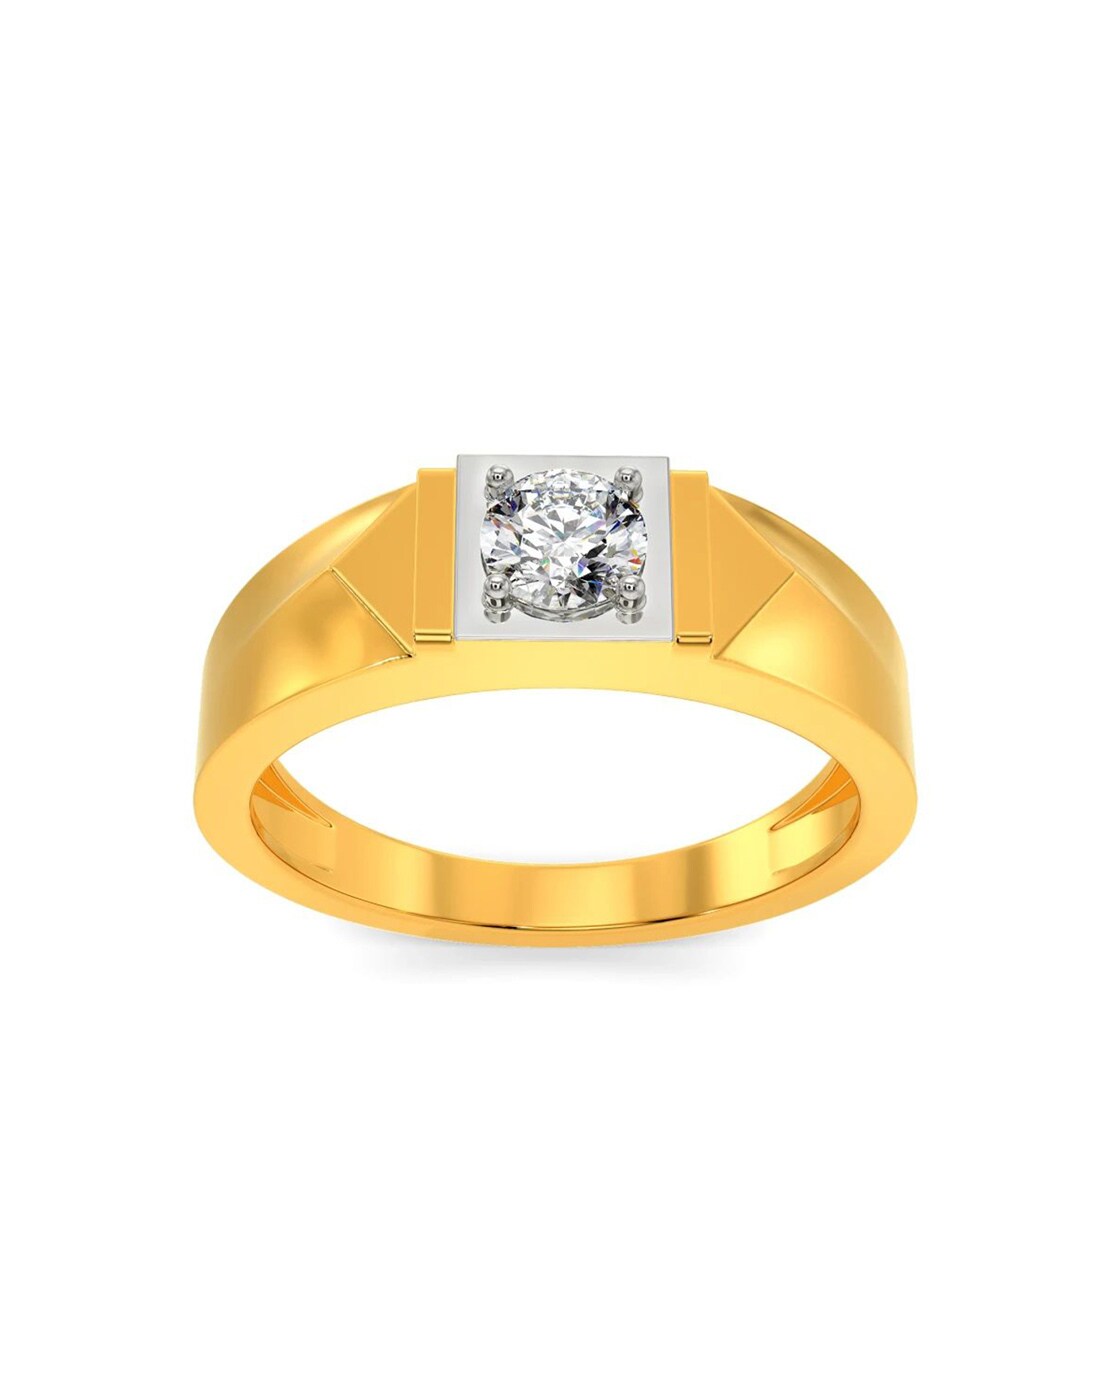 Update more than 167 tanishq diamond ring under 20000 super hot ...